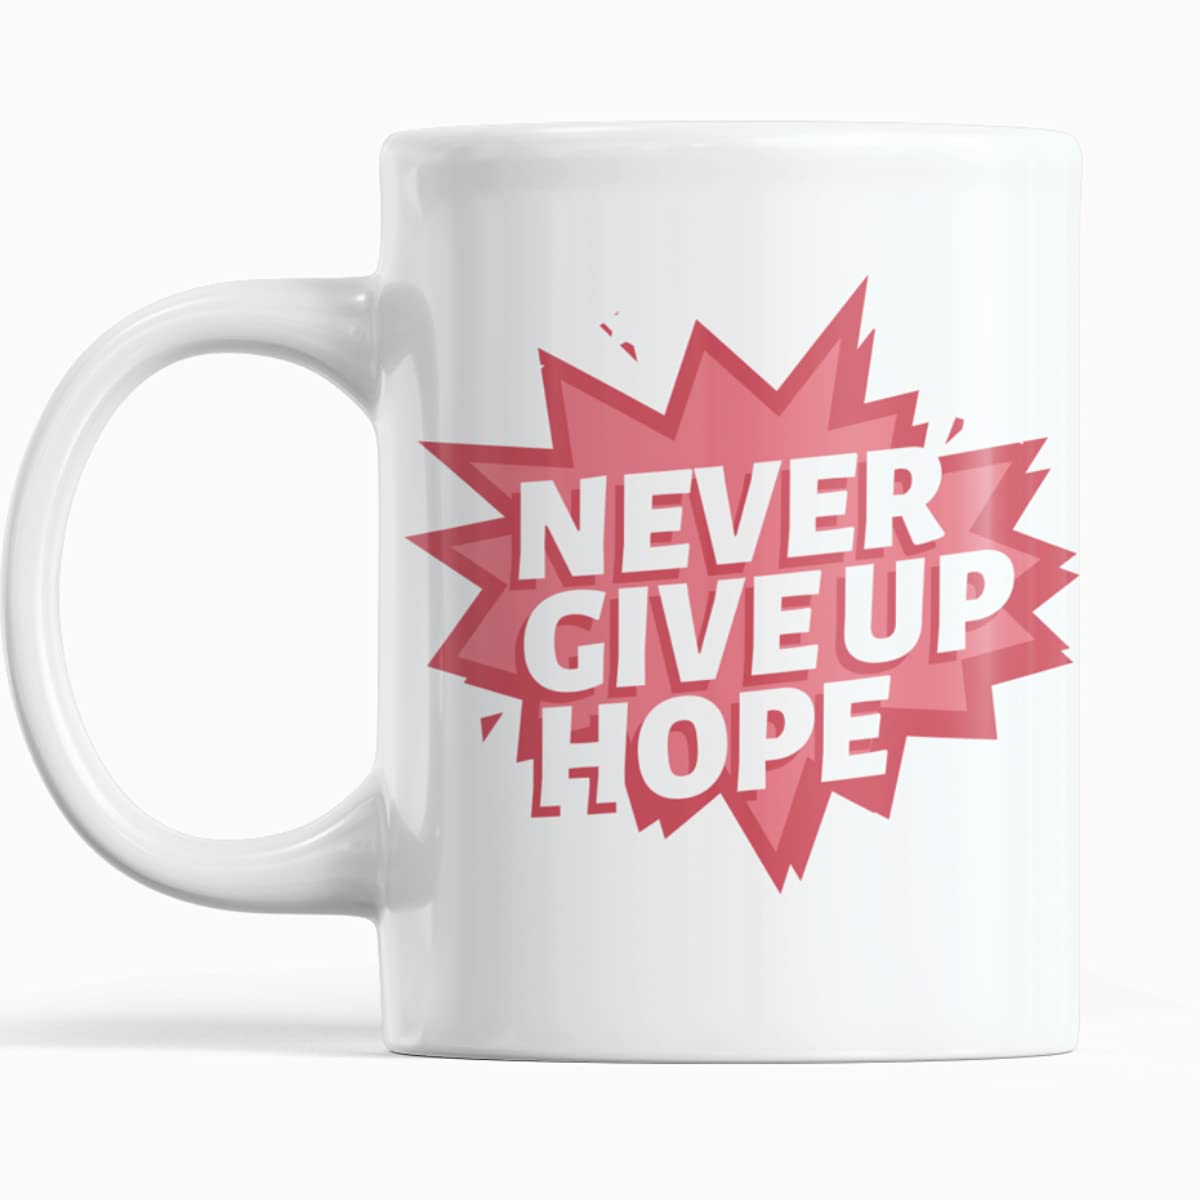 Motivational Quote Printed Designer Coffee Mug White